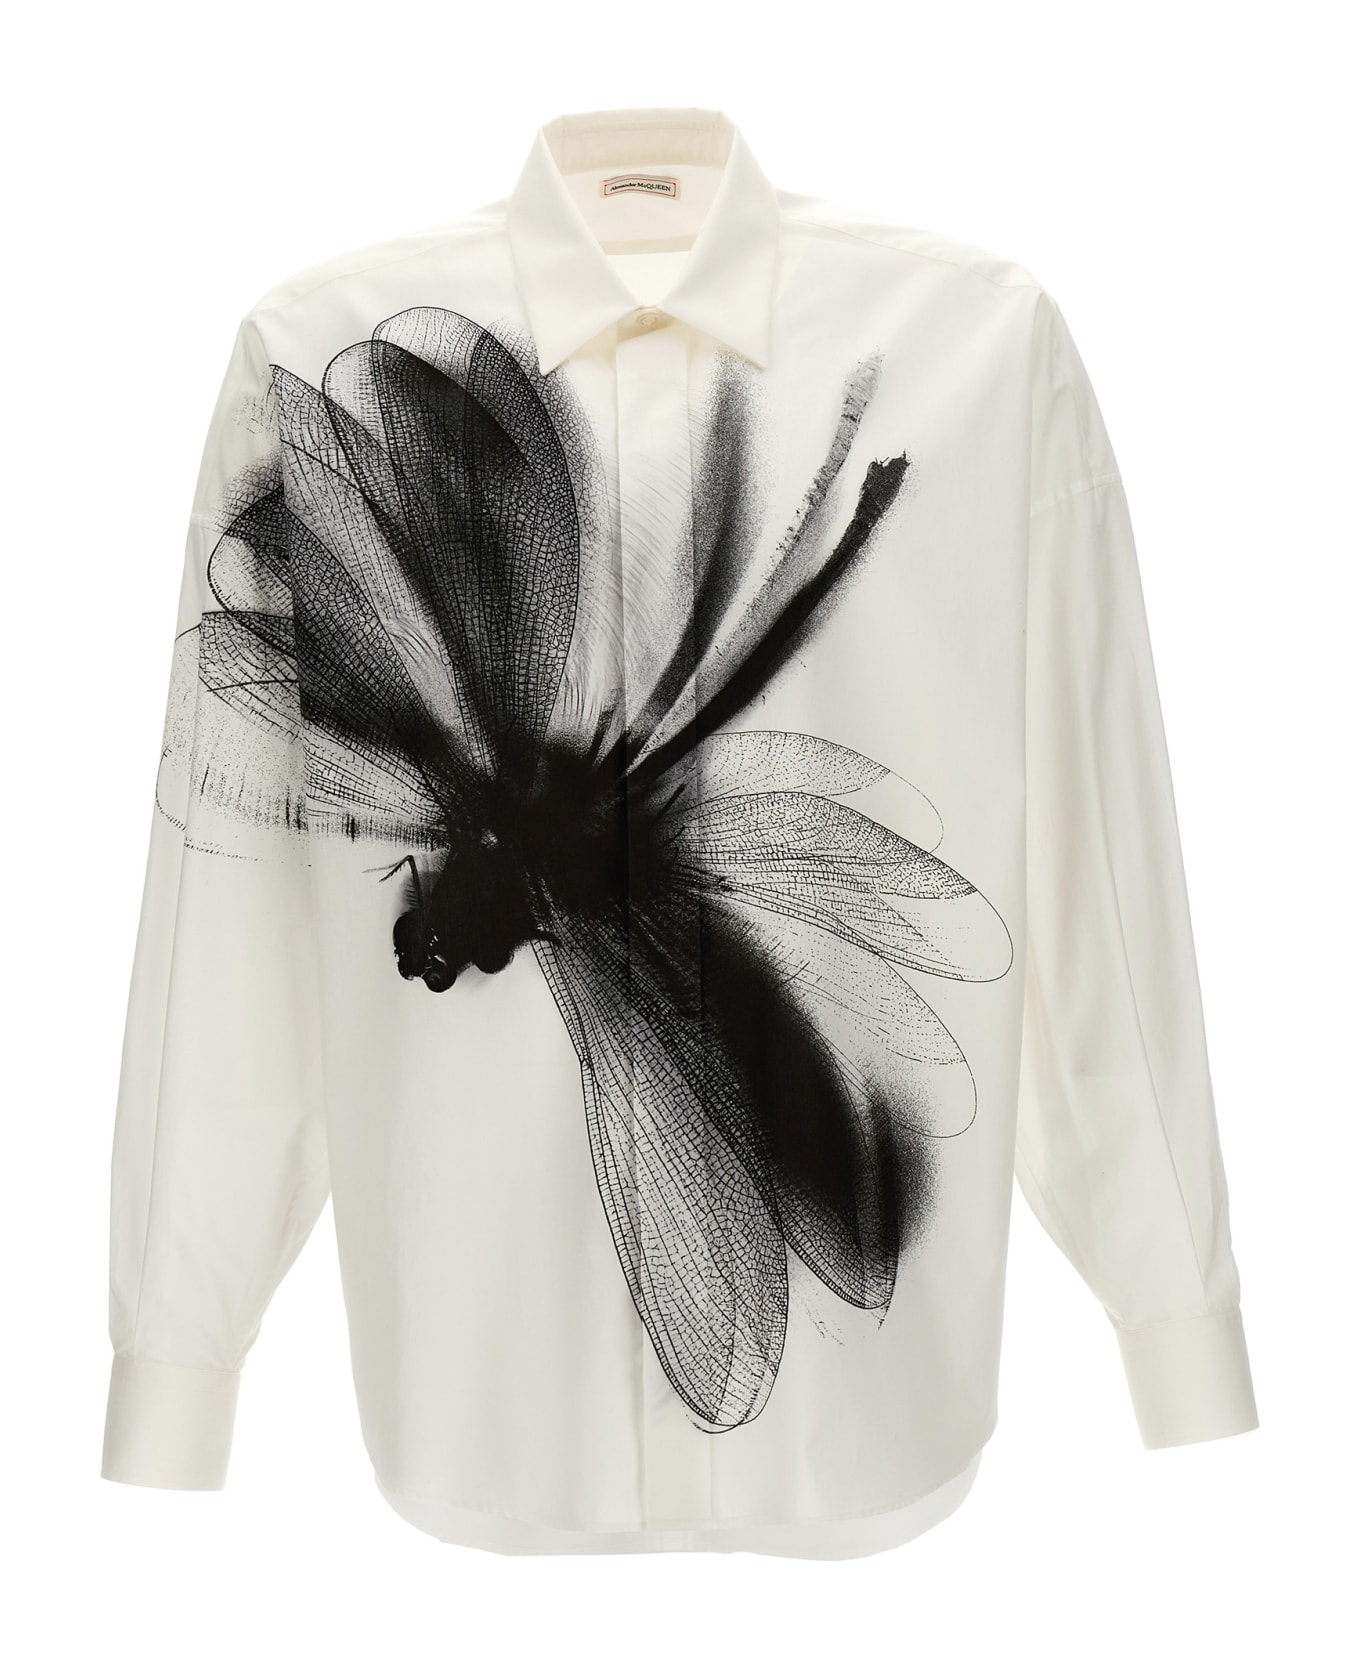 Alexander McQueen Printed Shirt - White/Black